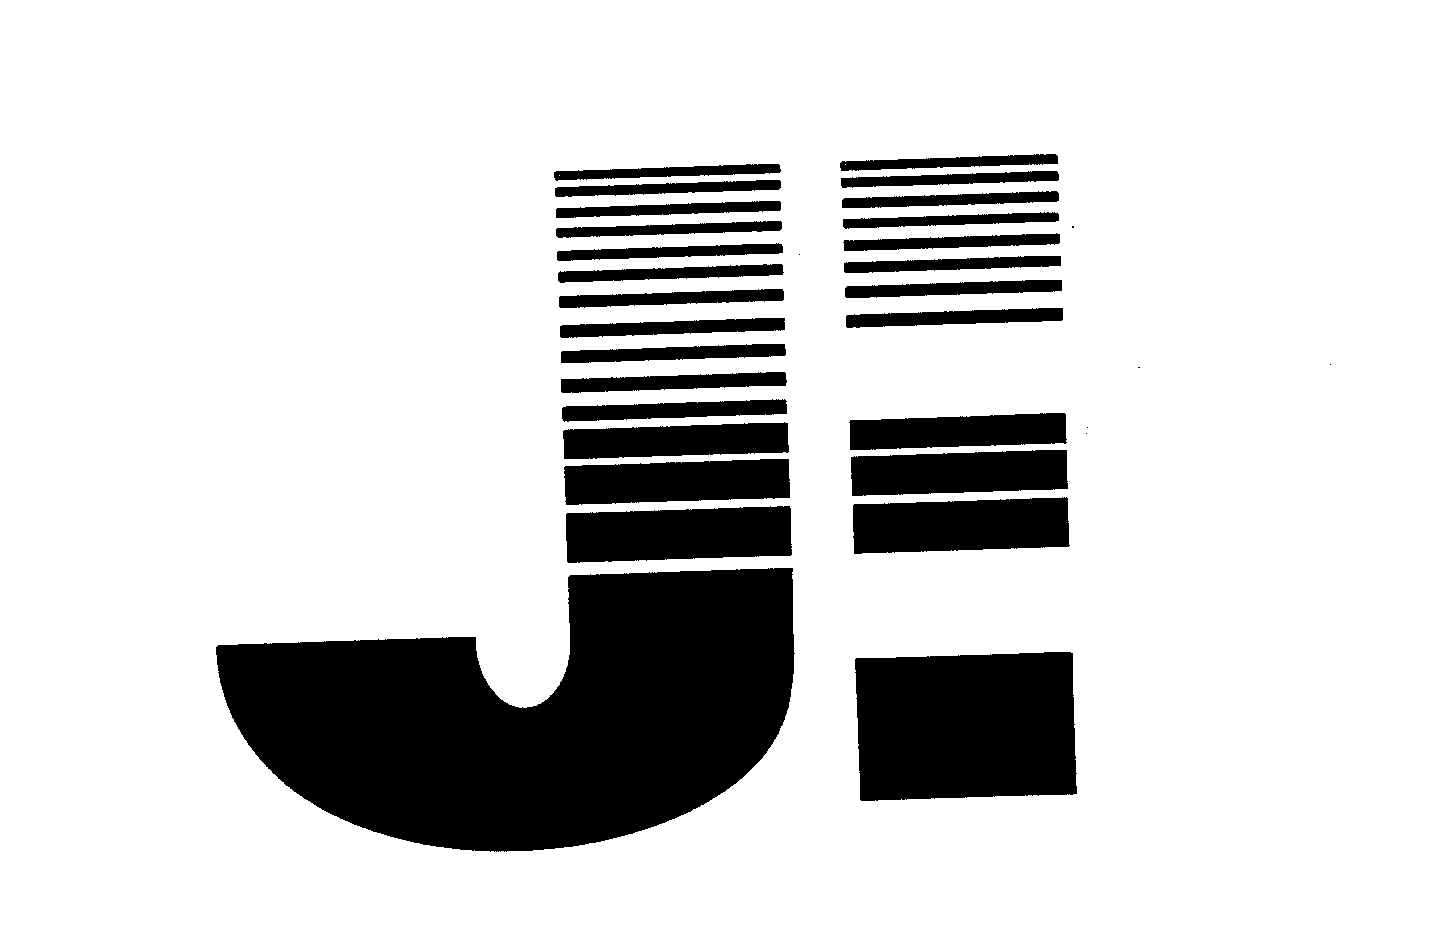 Trademark Logo JE